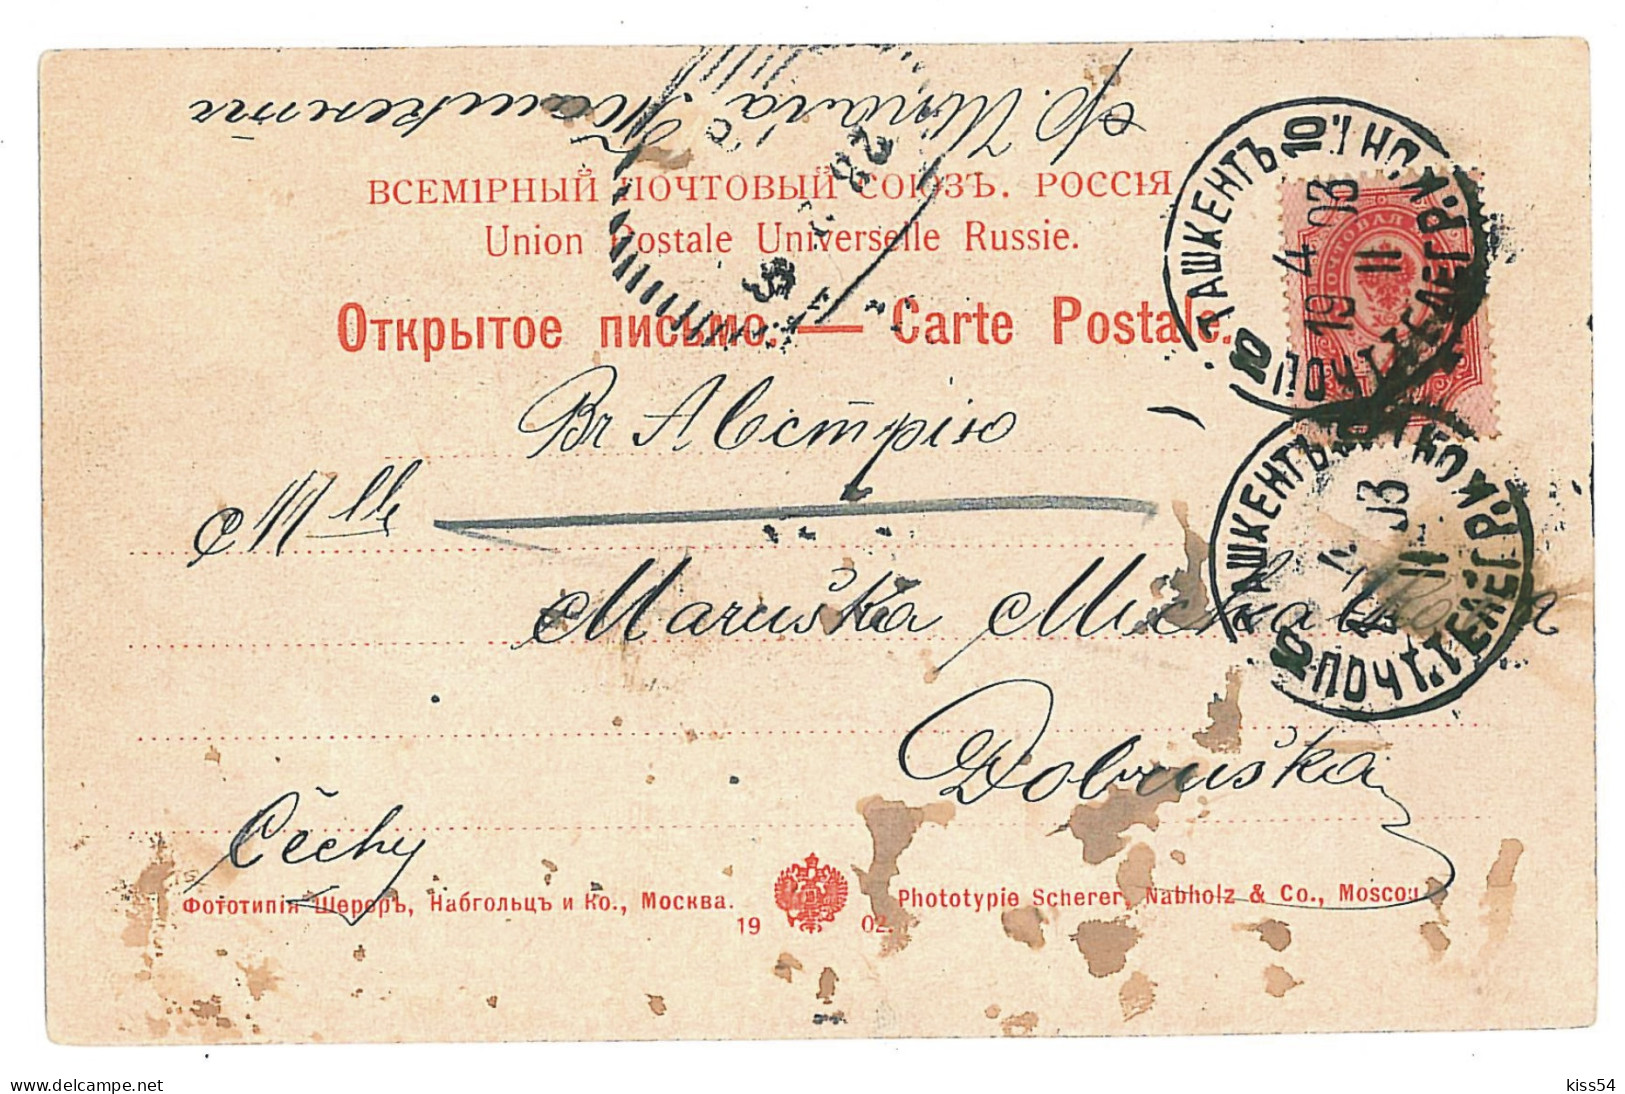 U 11 - 9828 TASHKENT, Uzbekistan, Church - Old Postcard - Used - 1903 - Oezbekistan